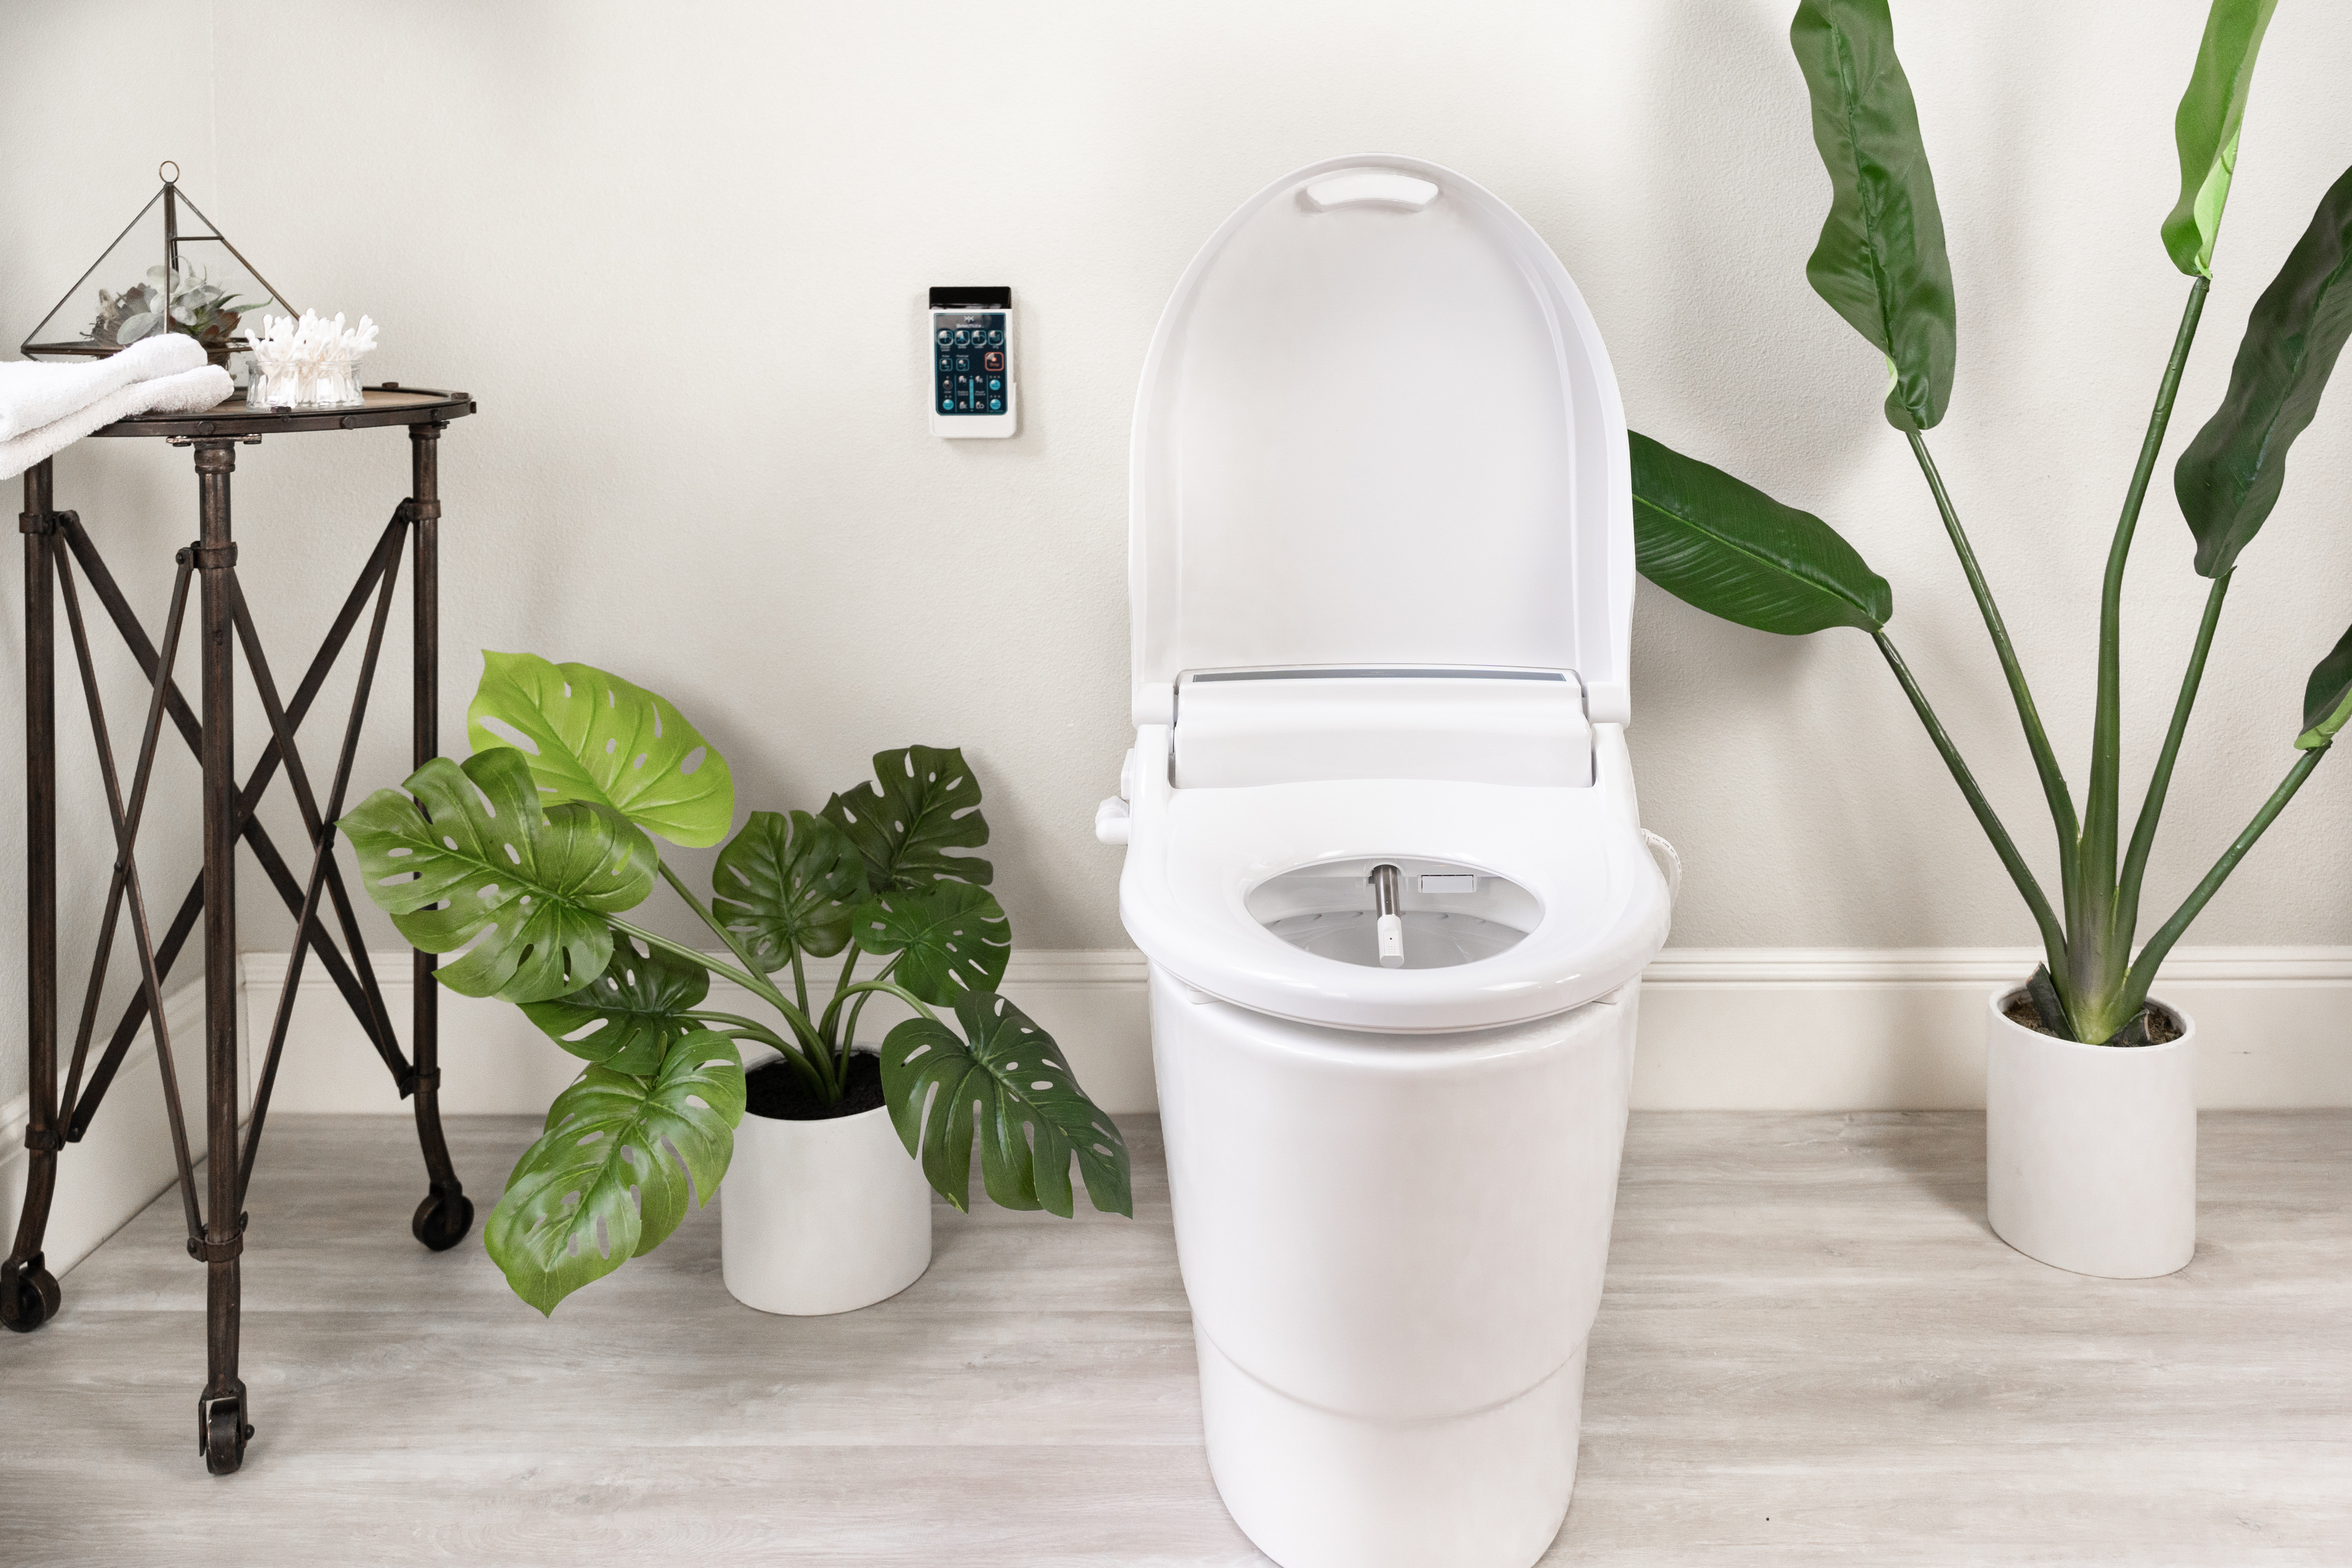 BidetMate Electric Heated Smart Toilet Elongated Bidet & Reviews | Wayfair